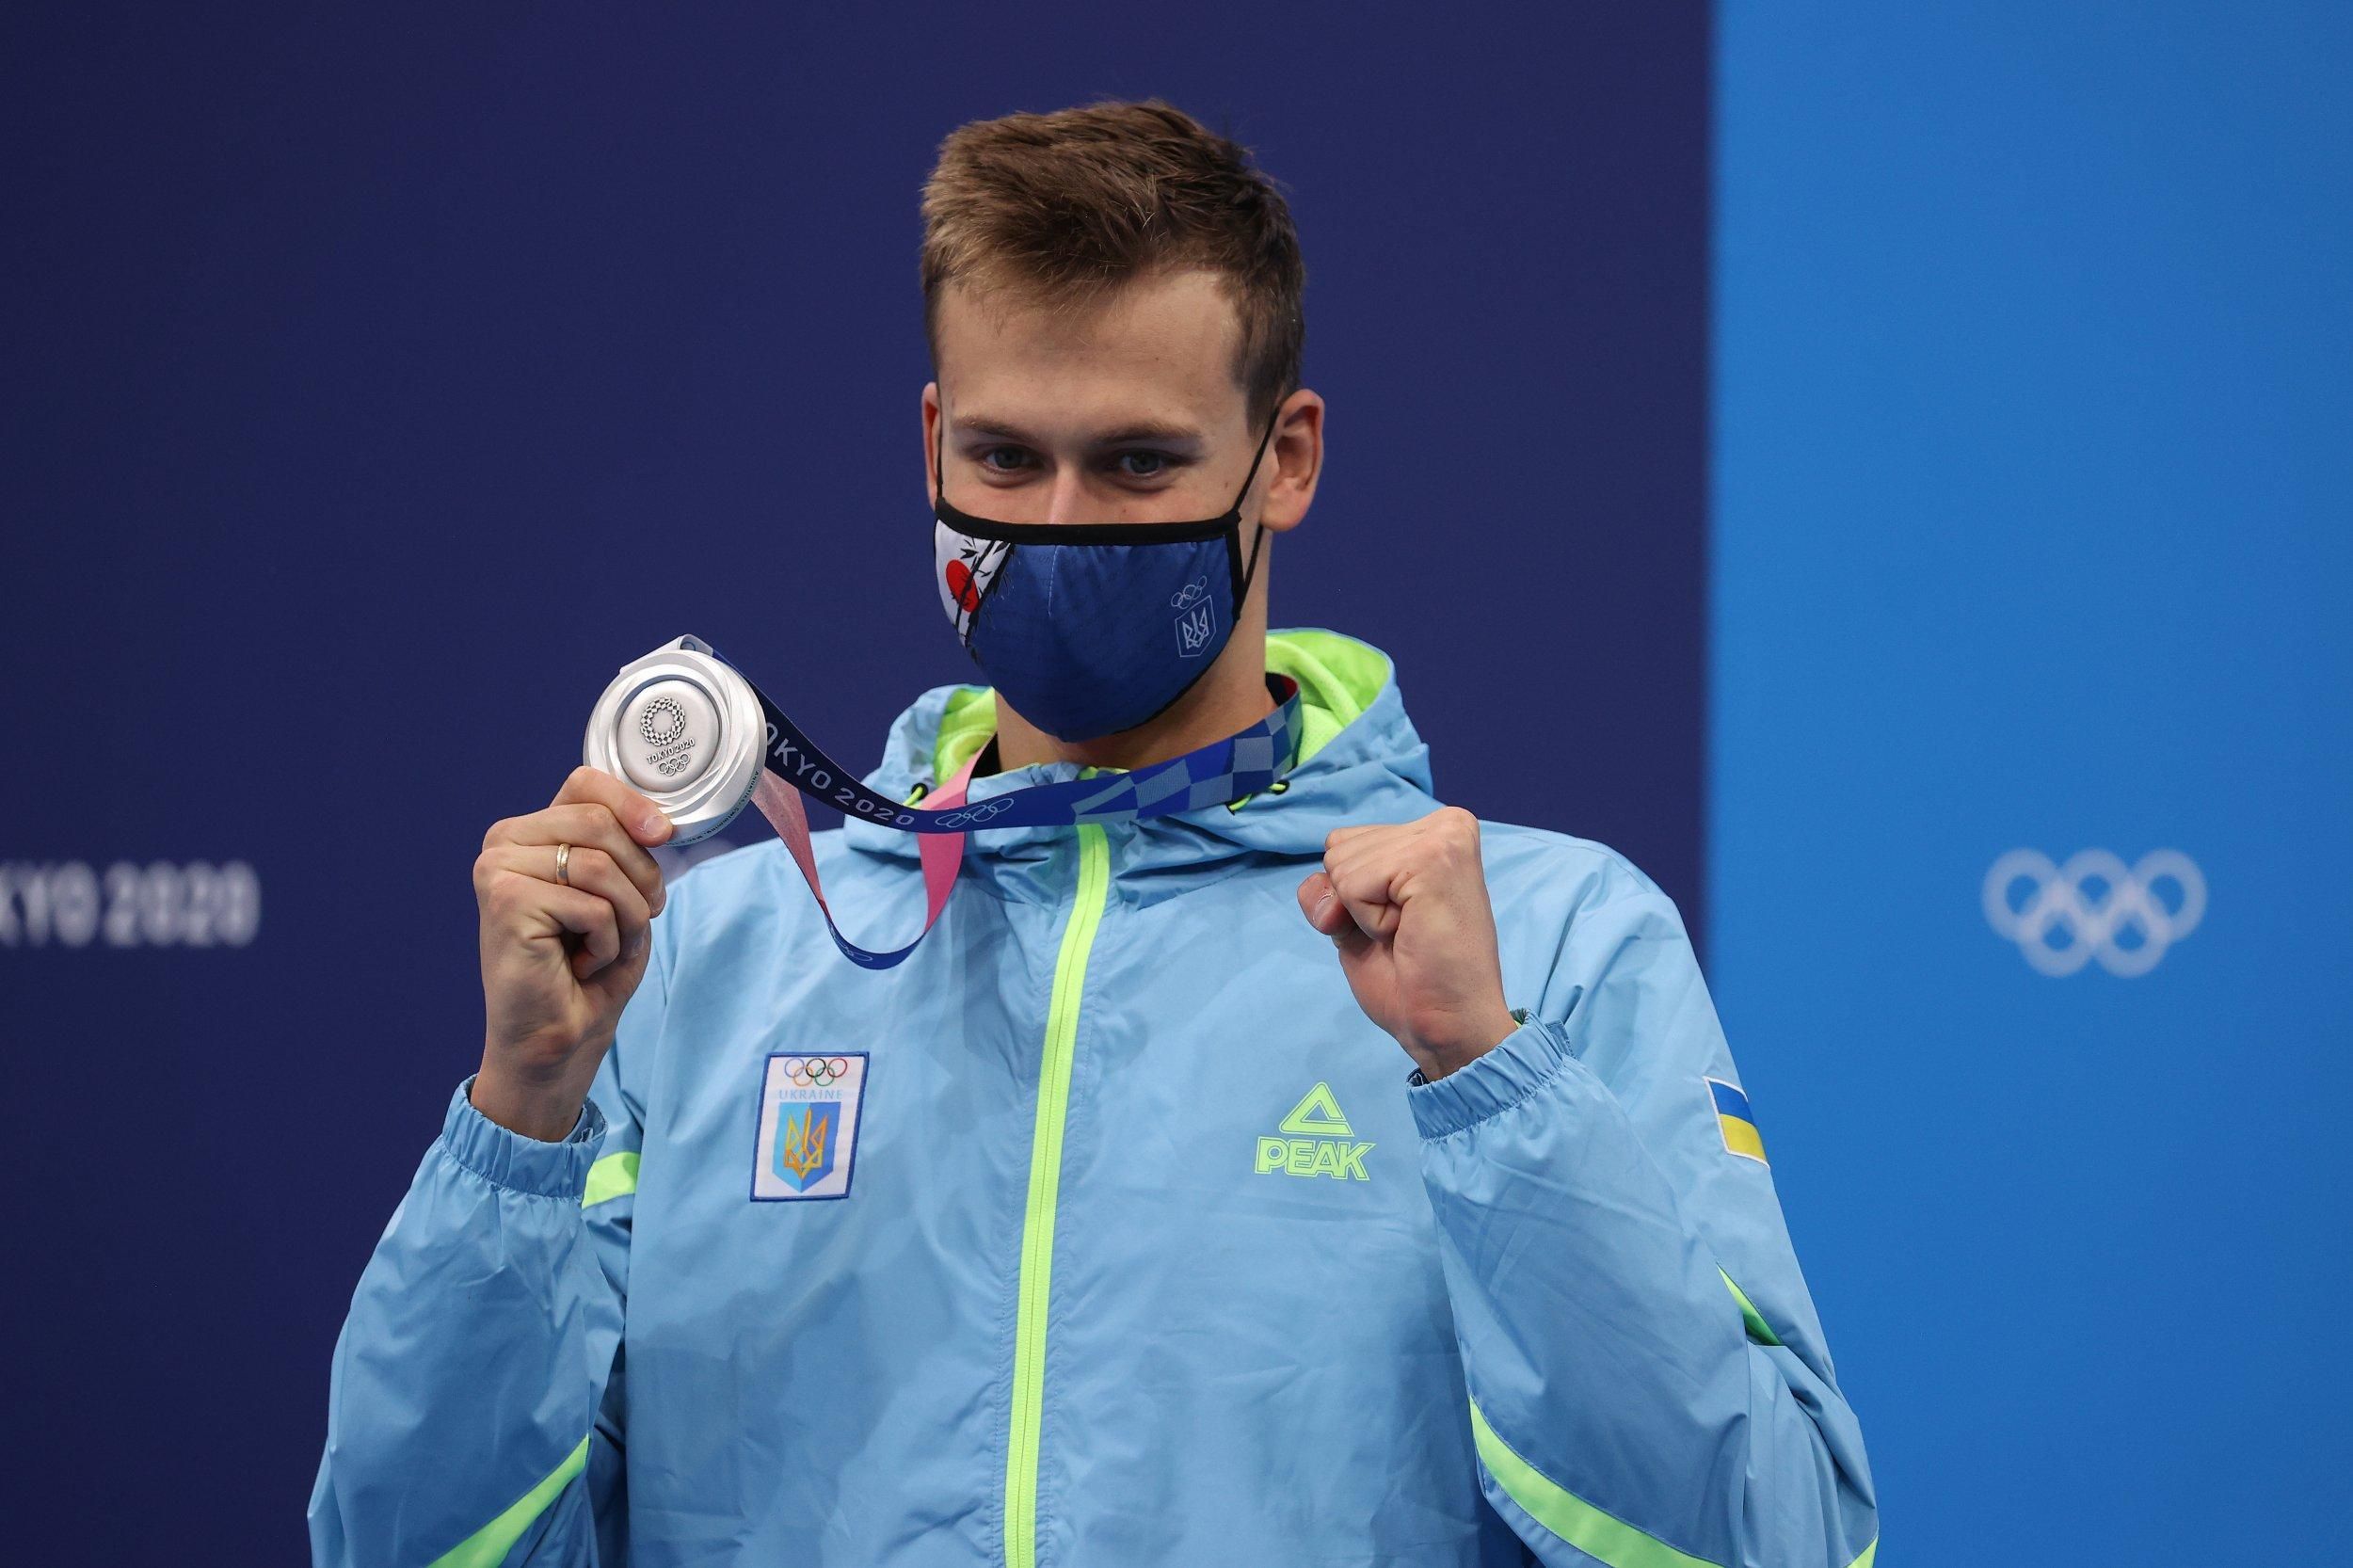 Михаил Романчук получил серебро на Олимпиаде 2020: видео заплыва